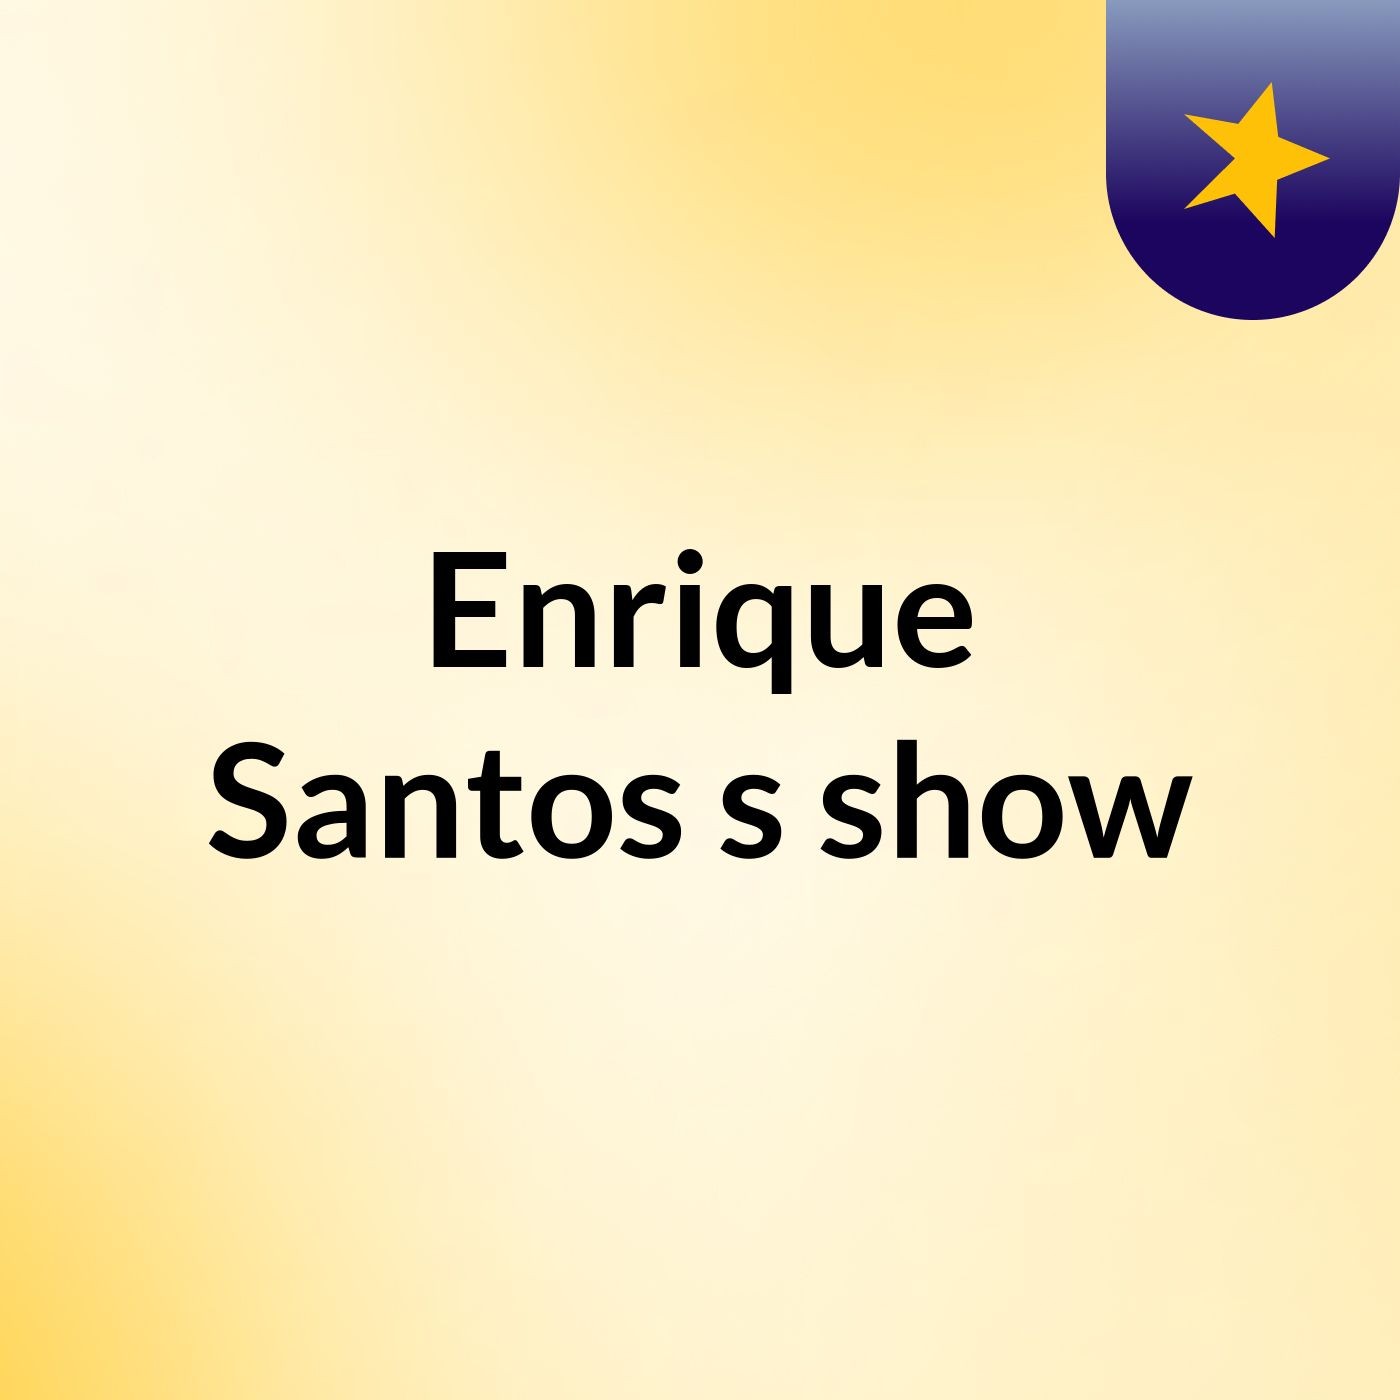 Enrique Santos's show